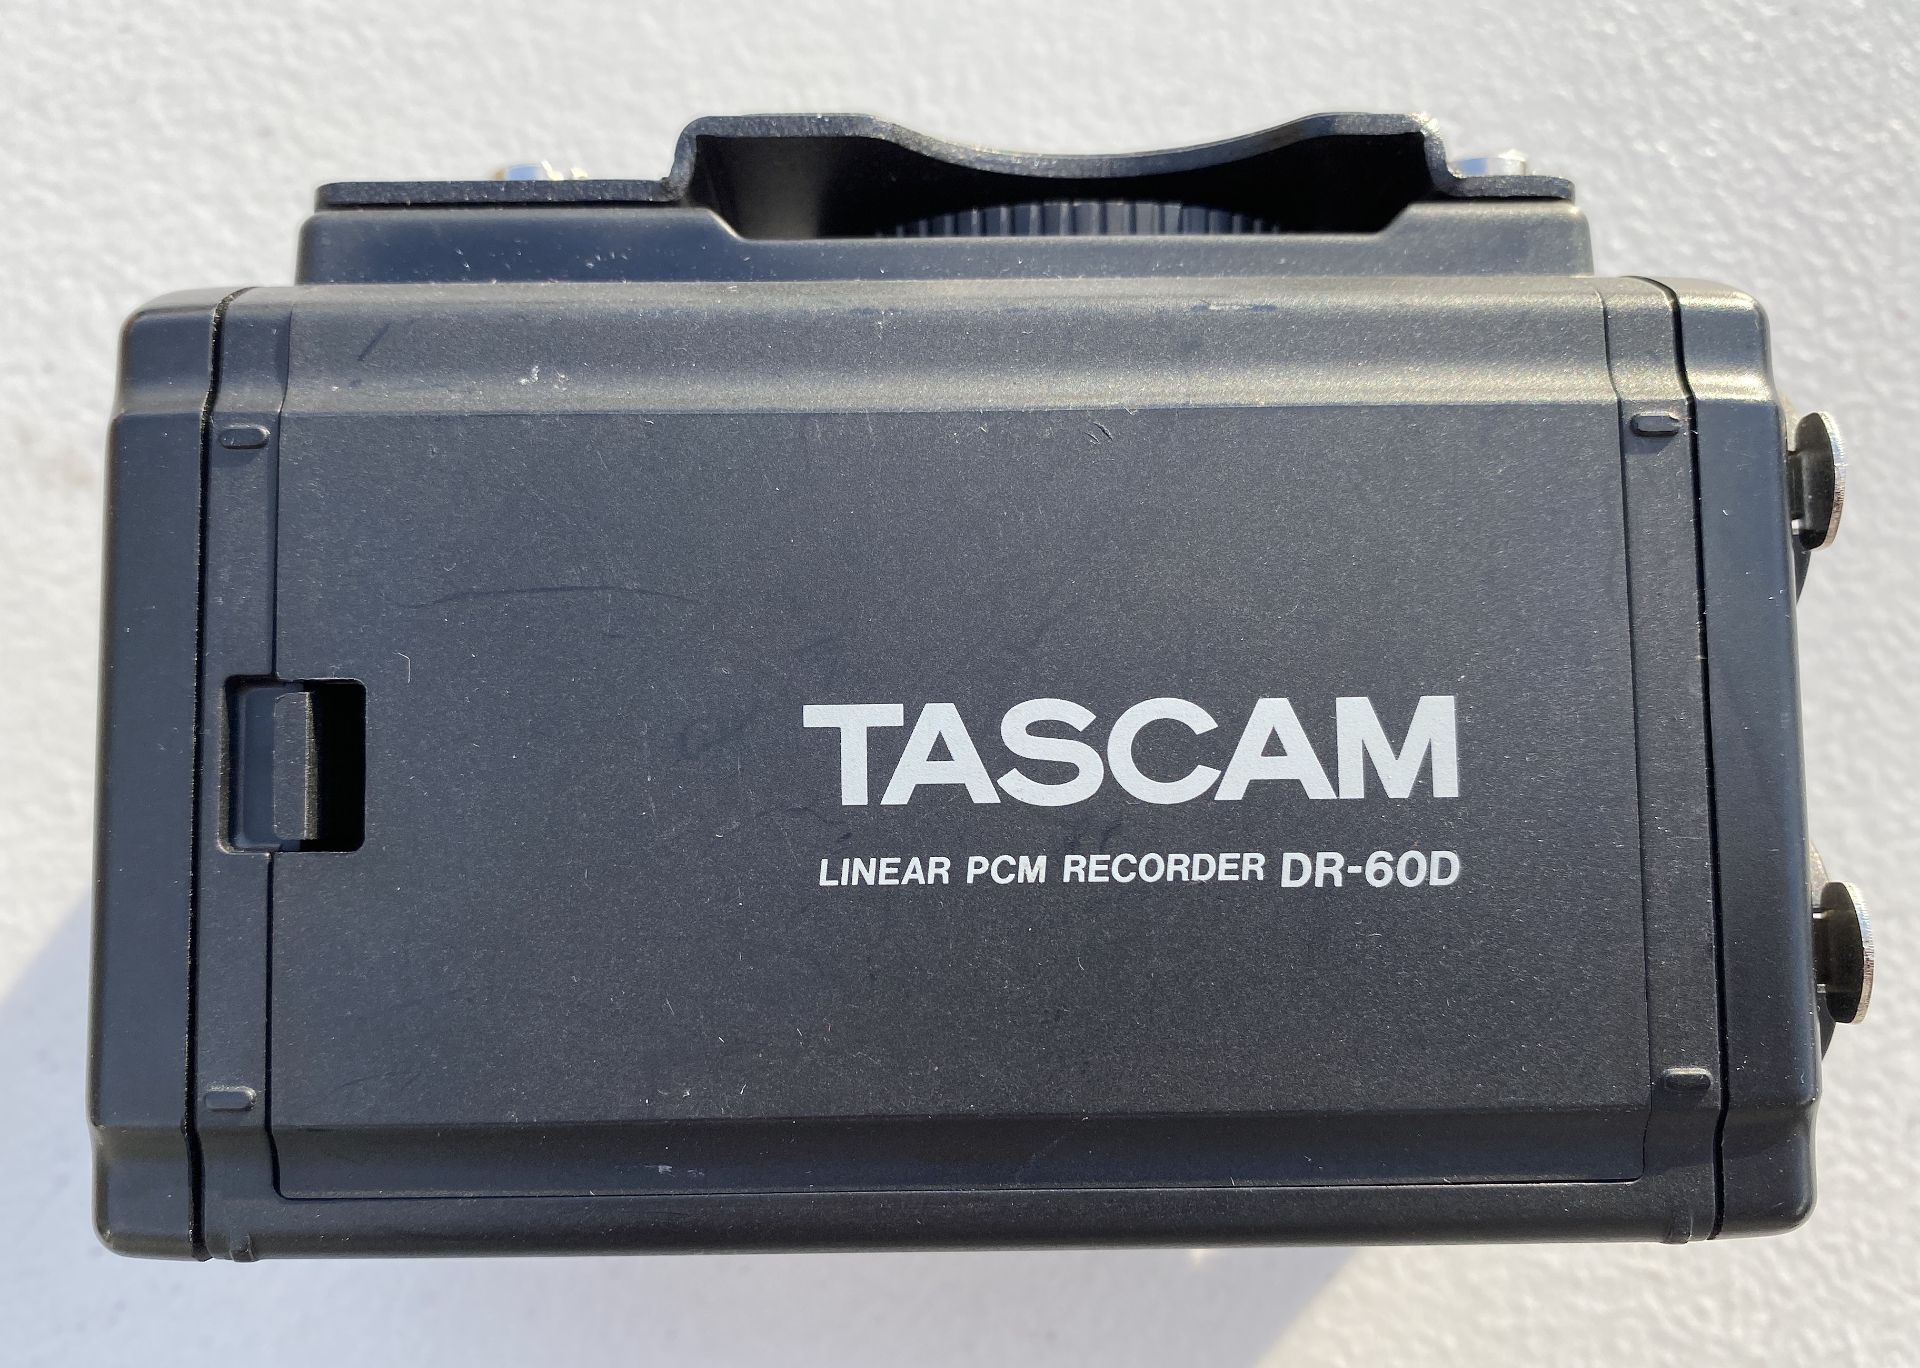 Tascam Linear PCM Recorder DR-60D, Swrial No.0060771